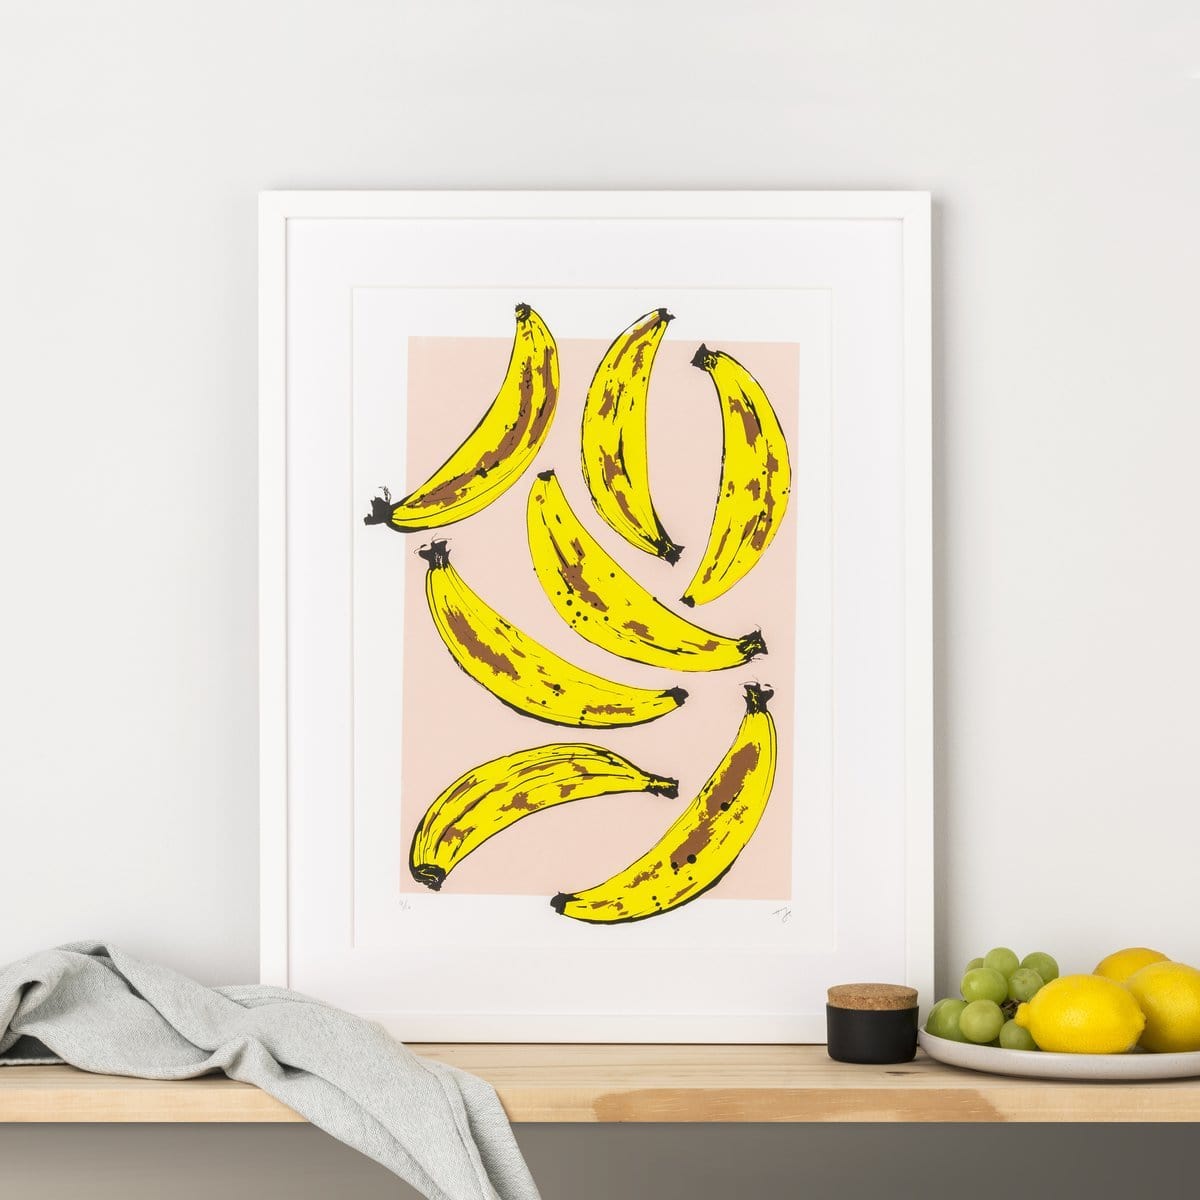 Bananas - Framed Enlarged